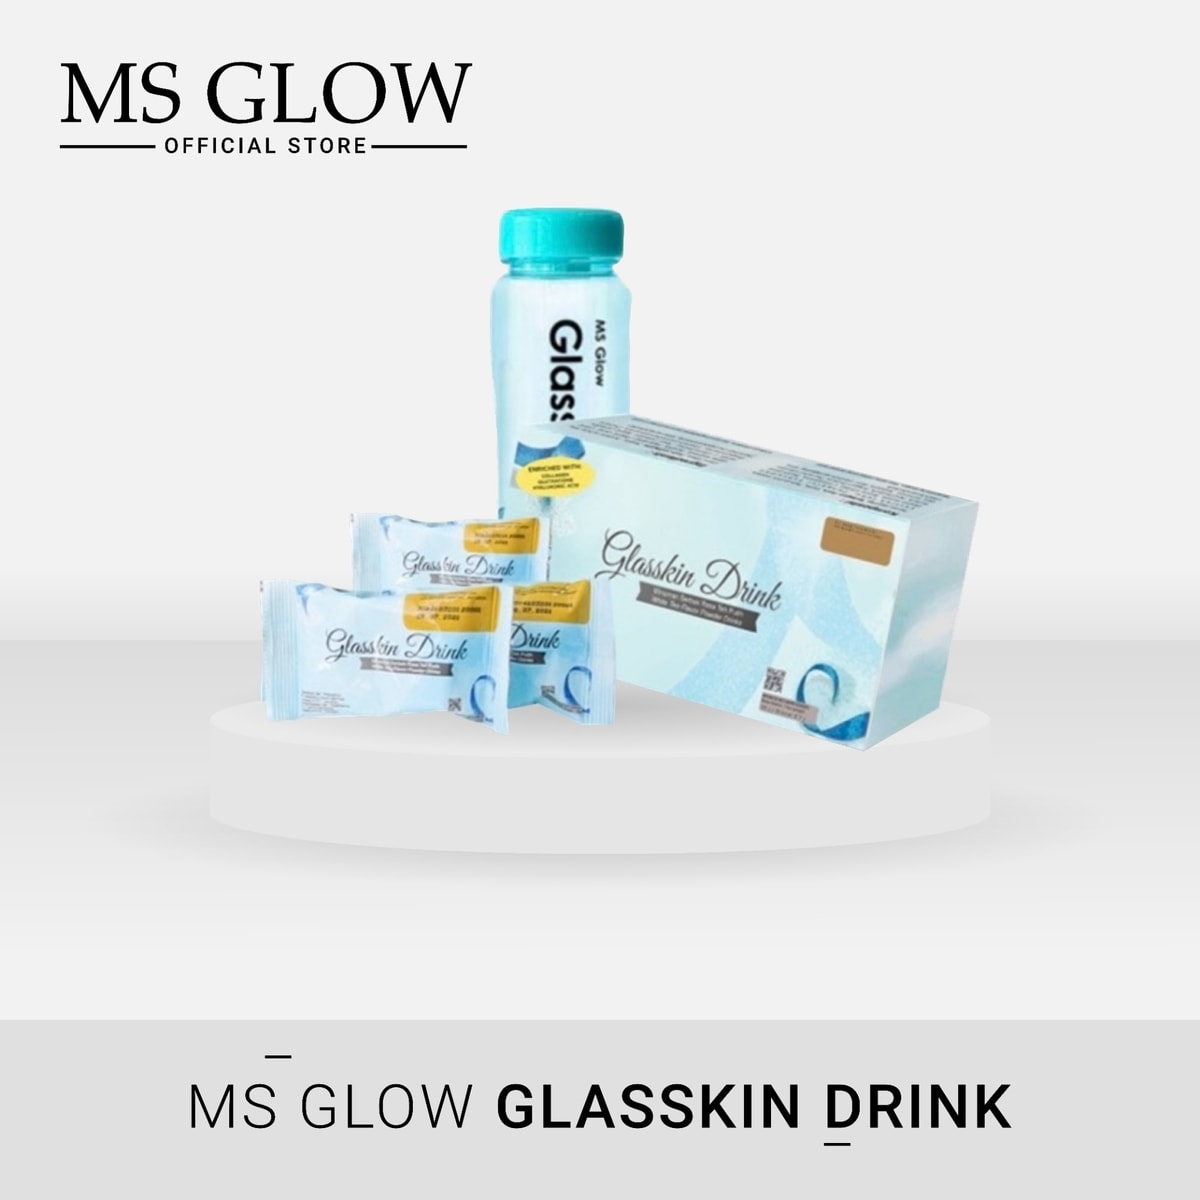 Penting Gak Minum Glasskin Drink MS Glow? Ini Manfaat, Kandungan & Cara Minum